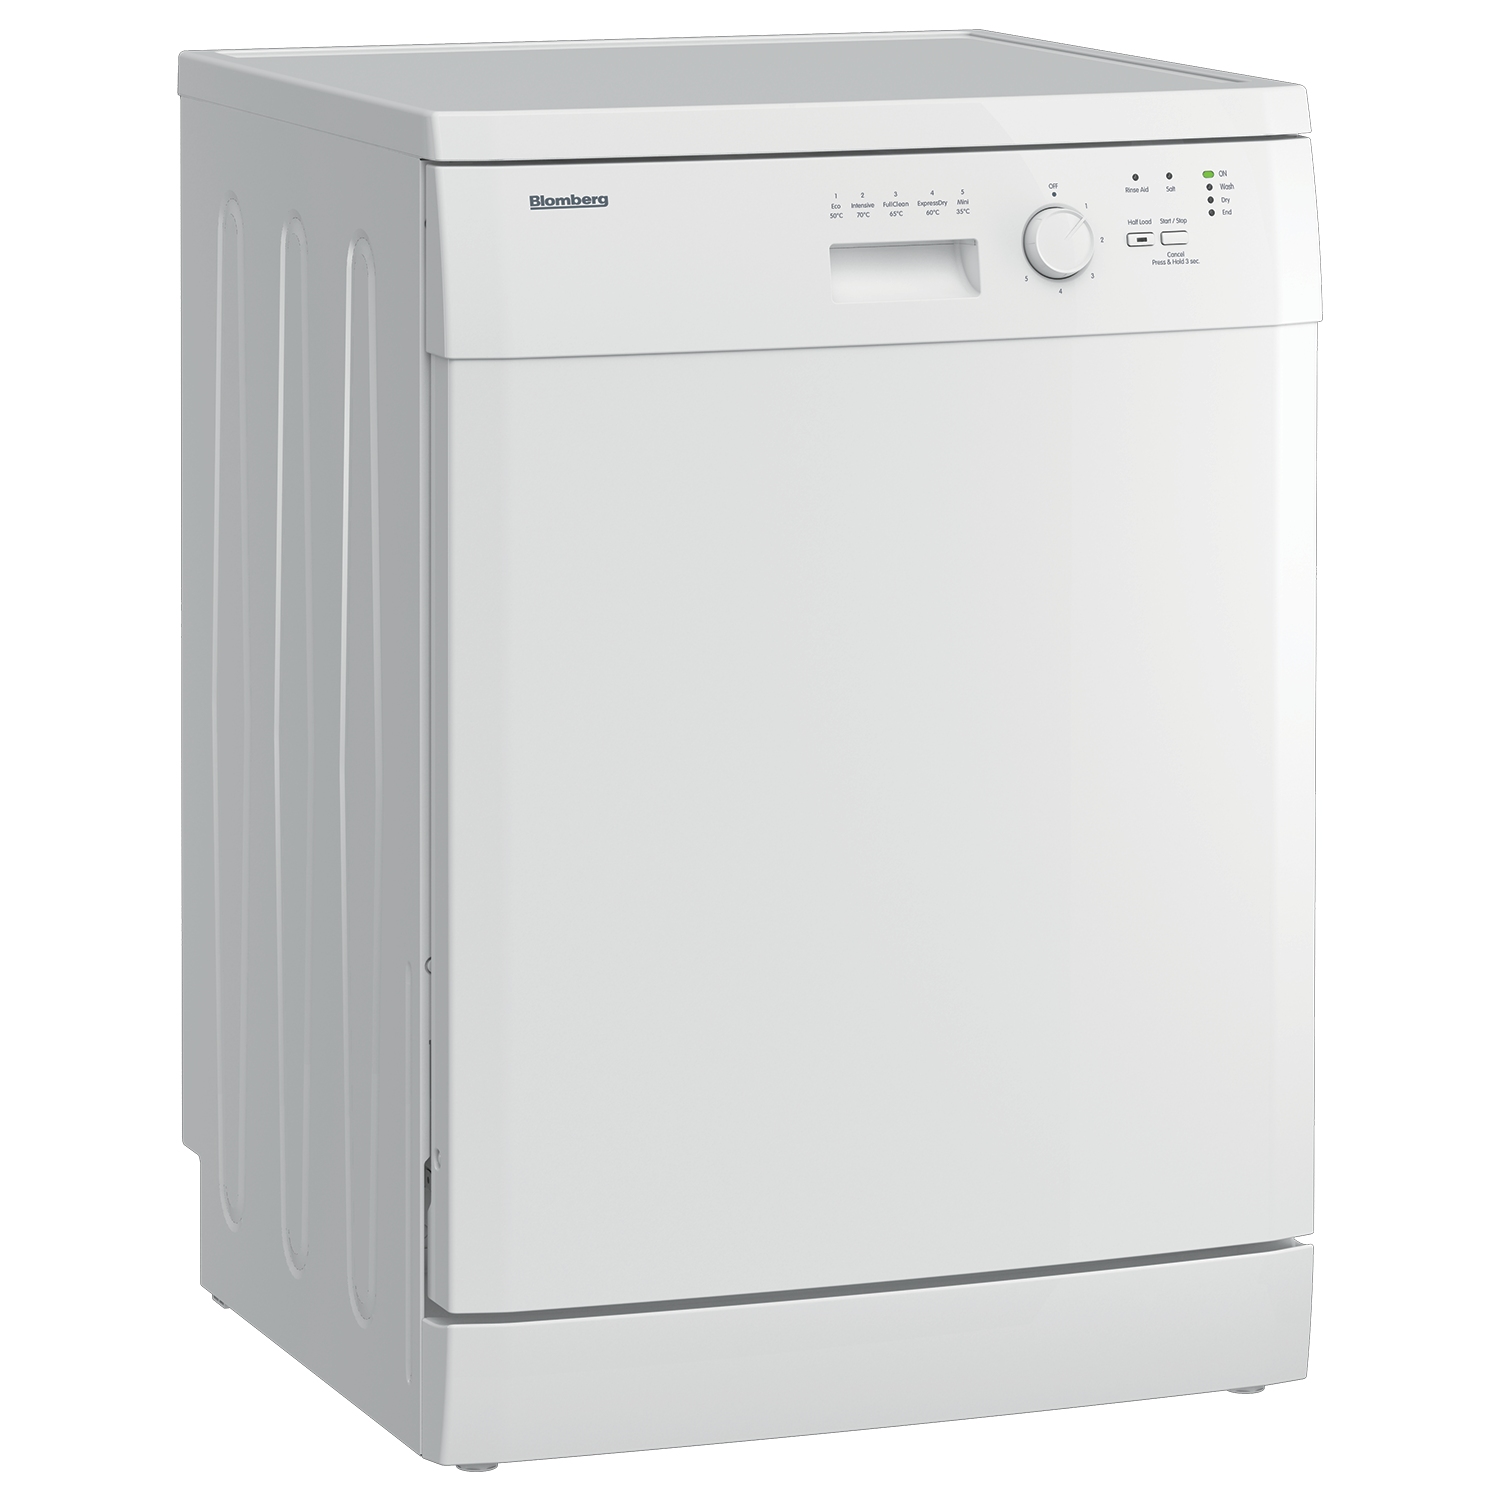 Blomberg LDF30211W Full Size Freestanding Dishwasher - White - 13 Place Settings - 0